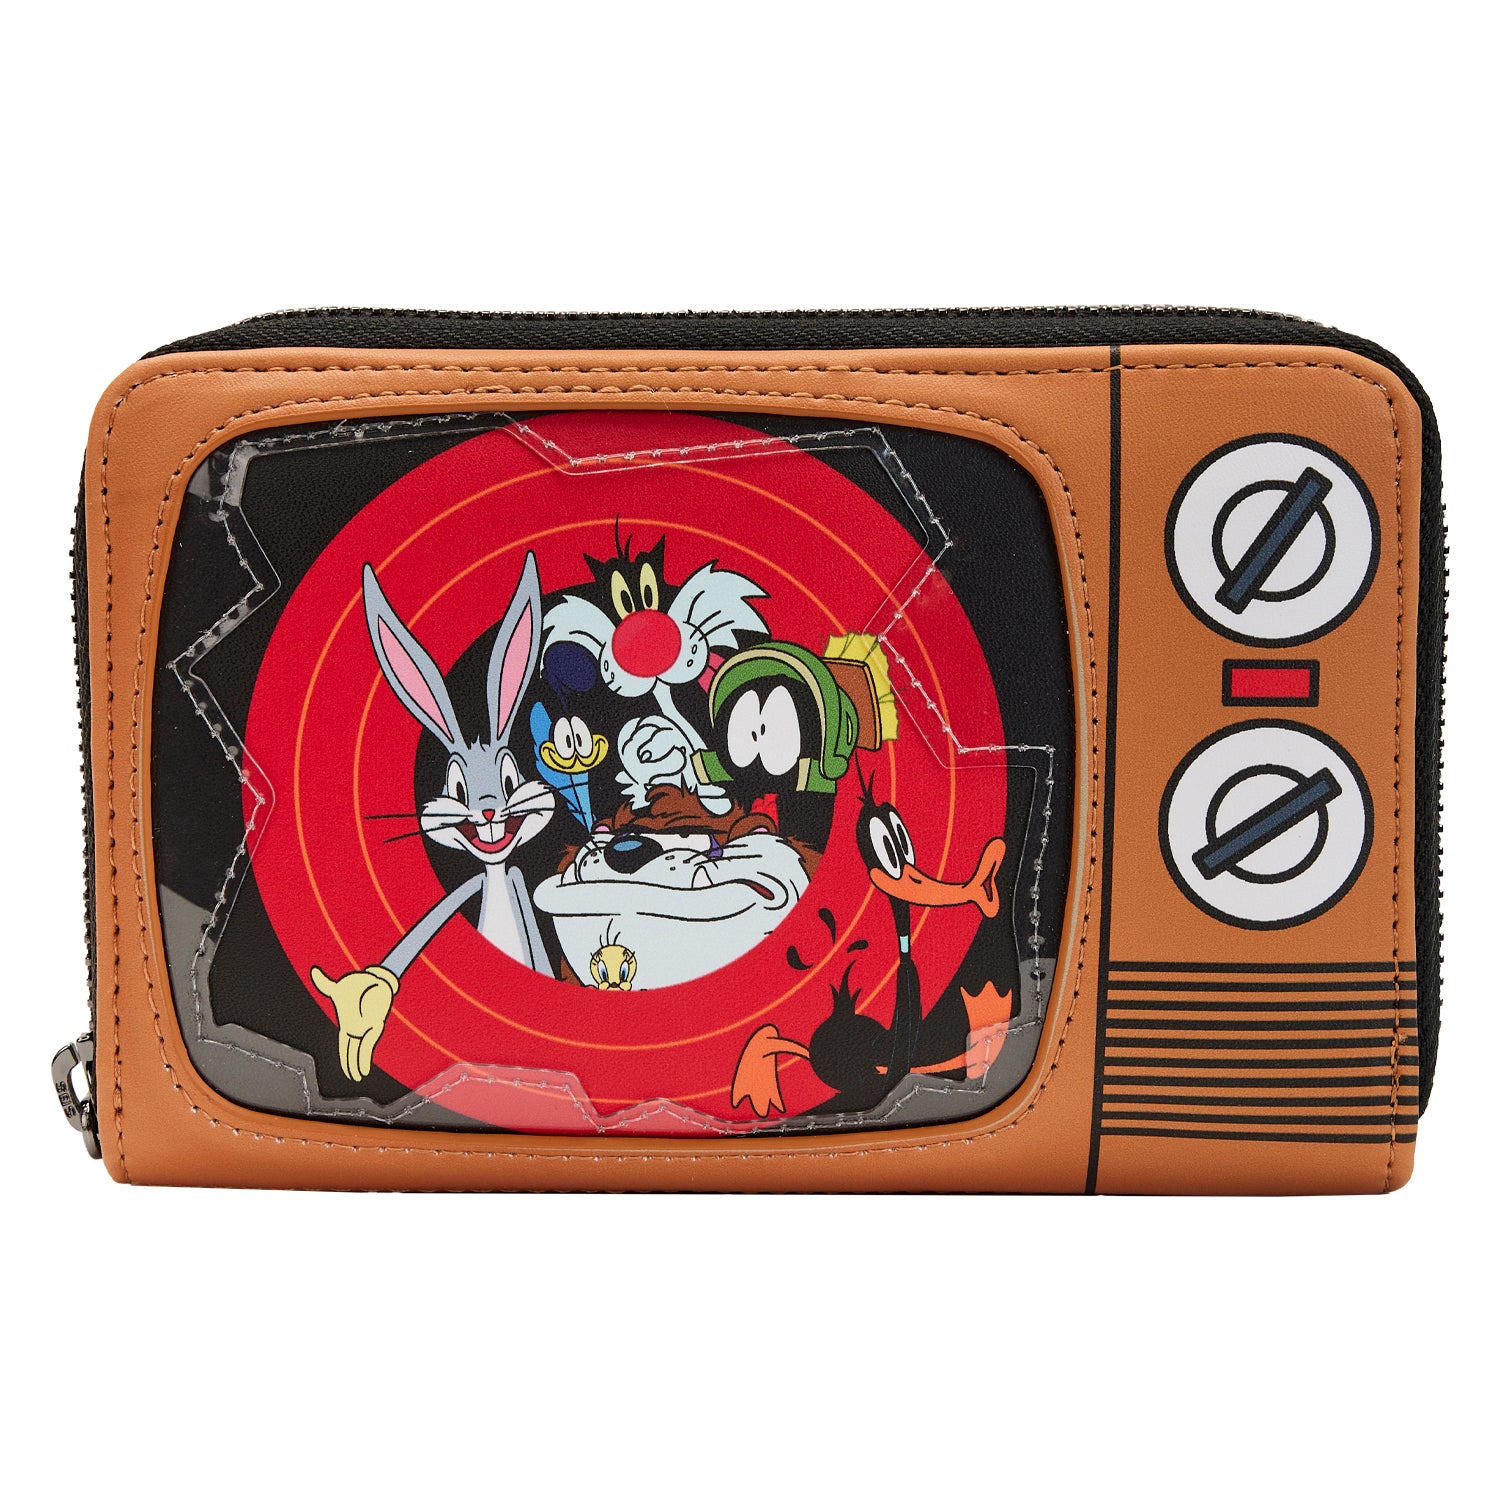 Looney Tunes | That's All Folks! Zip Around Wallet